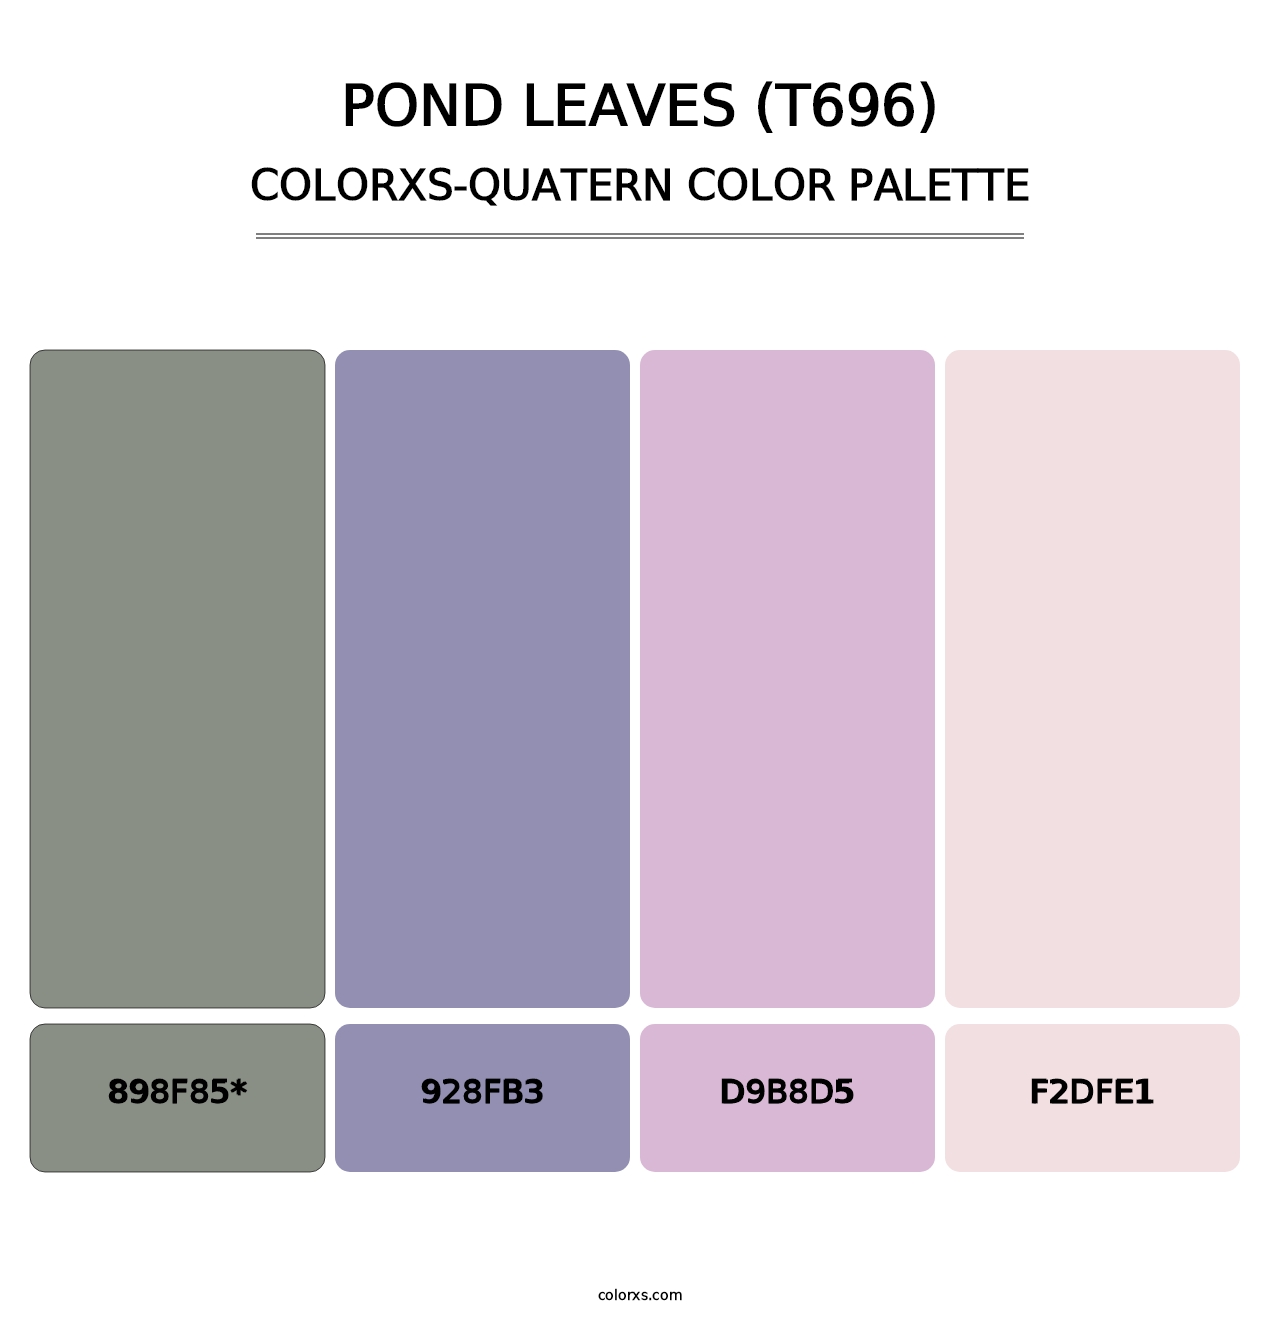 Pond Leaves (T696) - Colorxs Quatern Palette